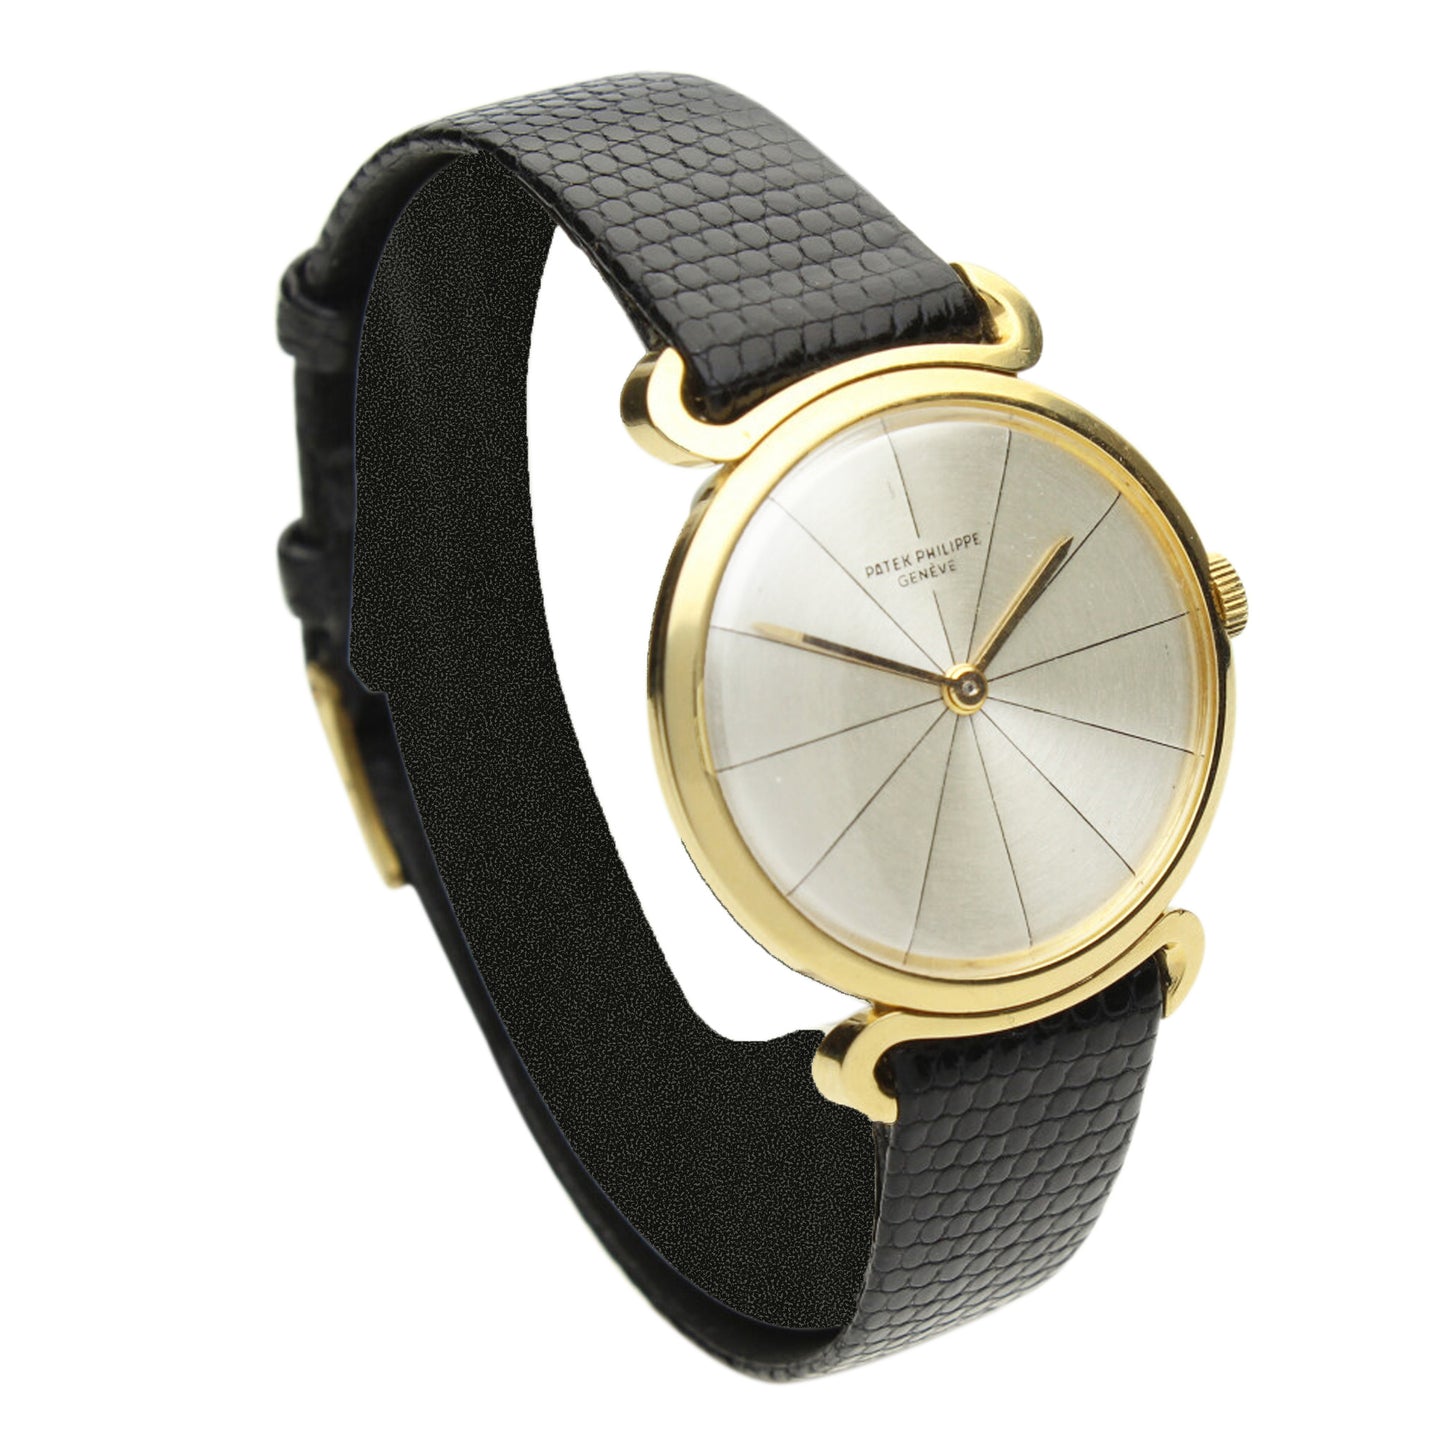 18ct yellow gold Patek Philippe, reference 3442 Calatrava wristwatch. Made 1961